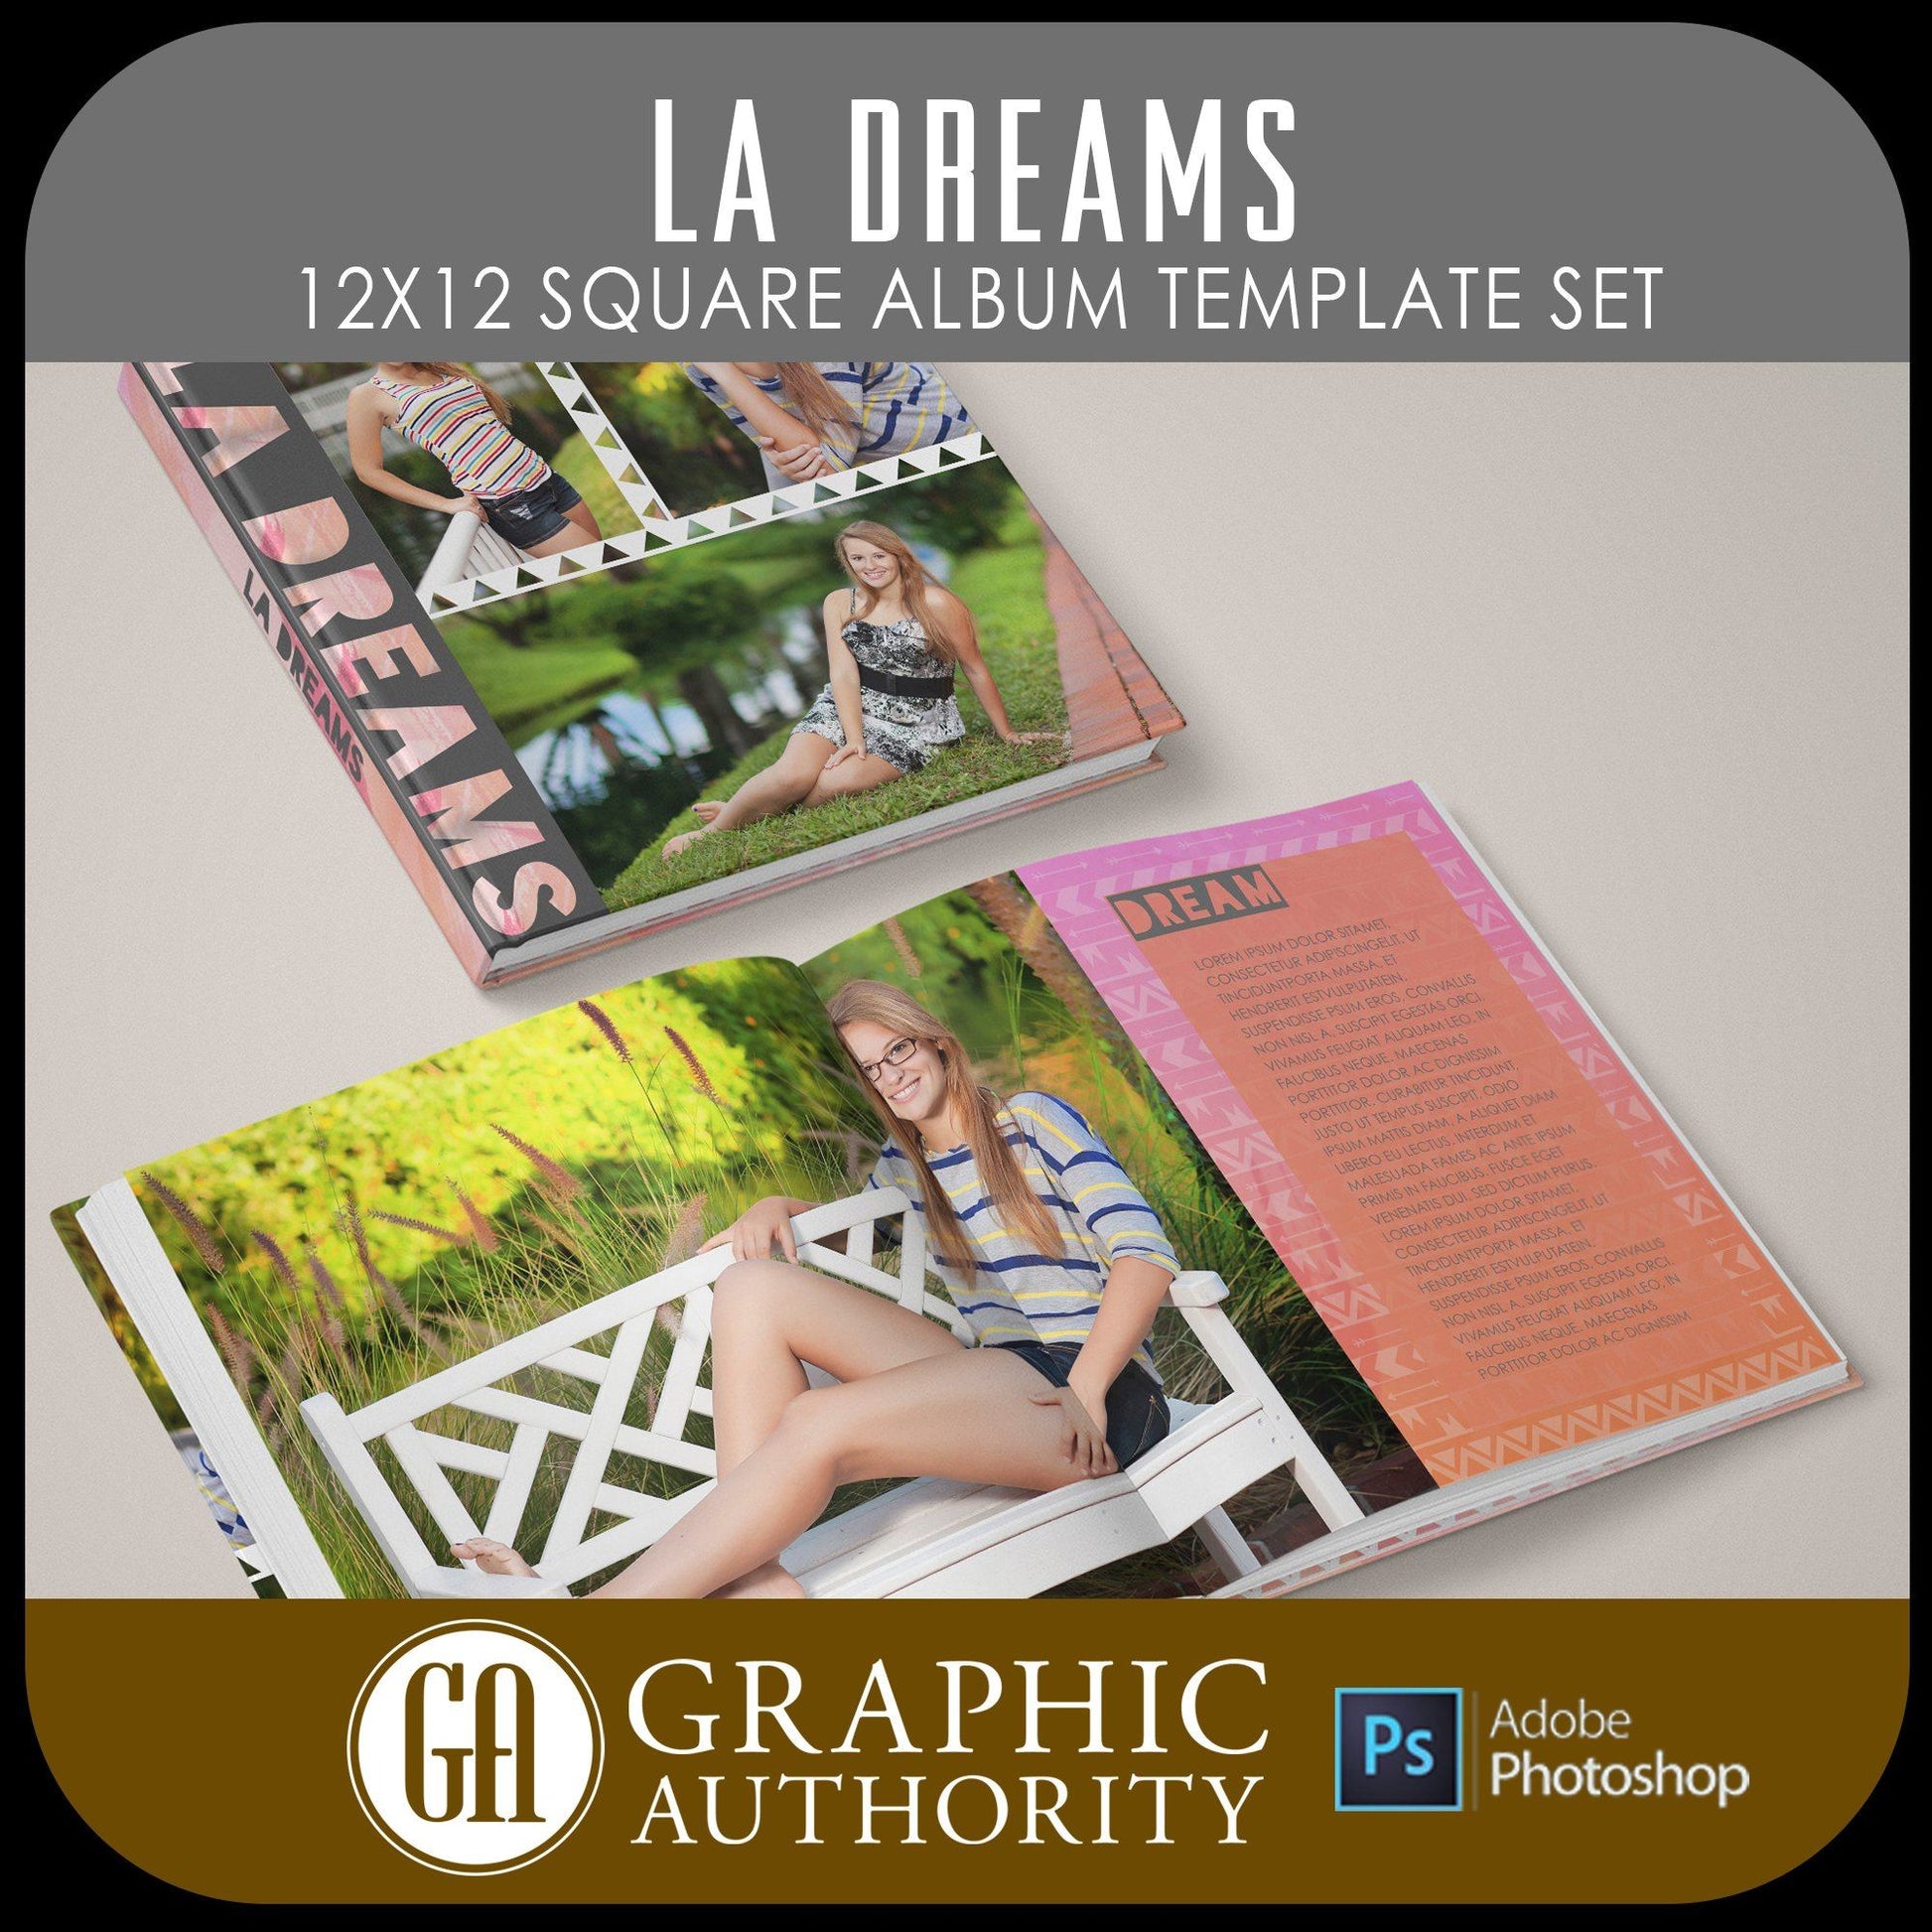 LA Dreams - 12x24 - Album Spreads-Photoshop Template - Graphic Authority